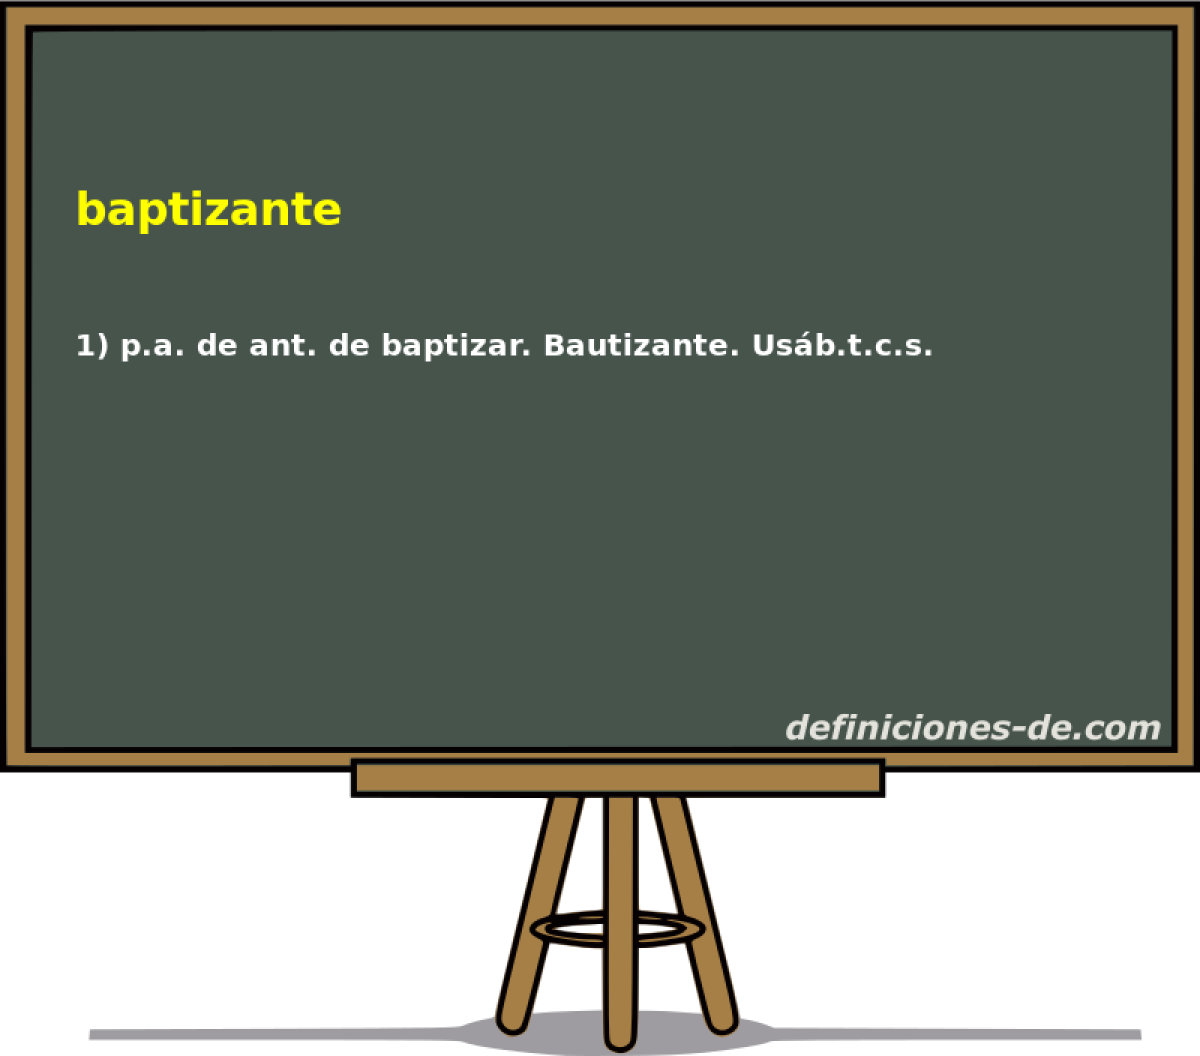 baptizante 